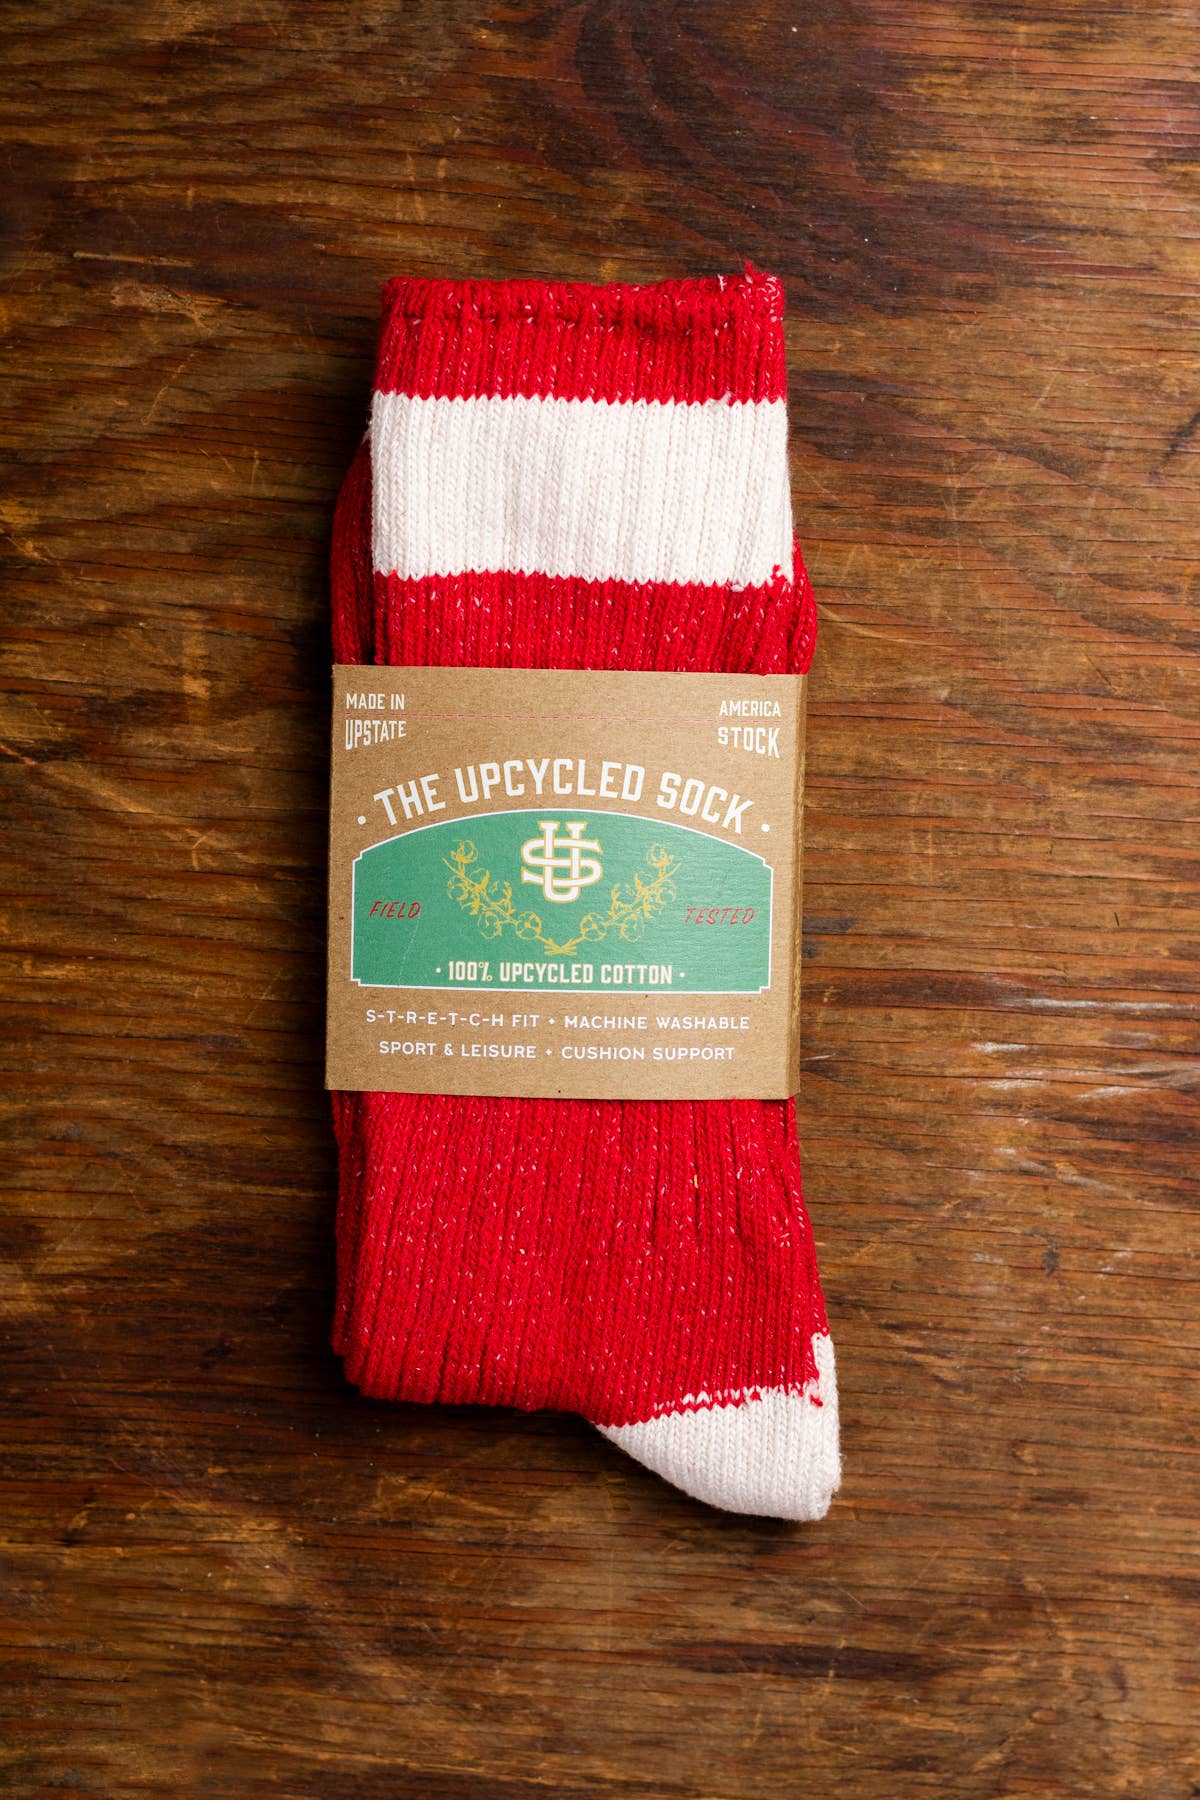 The Upcycled Sock: OCHRE